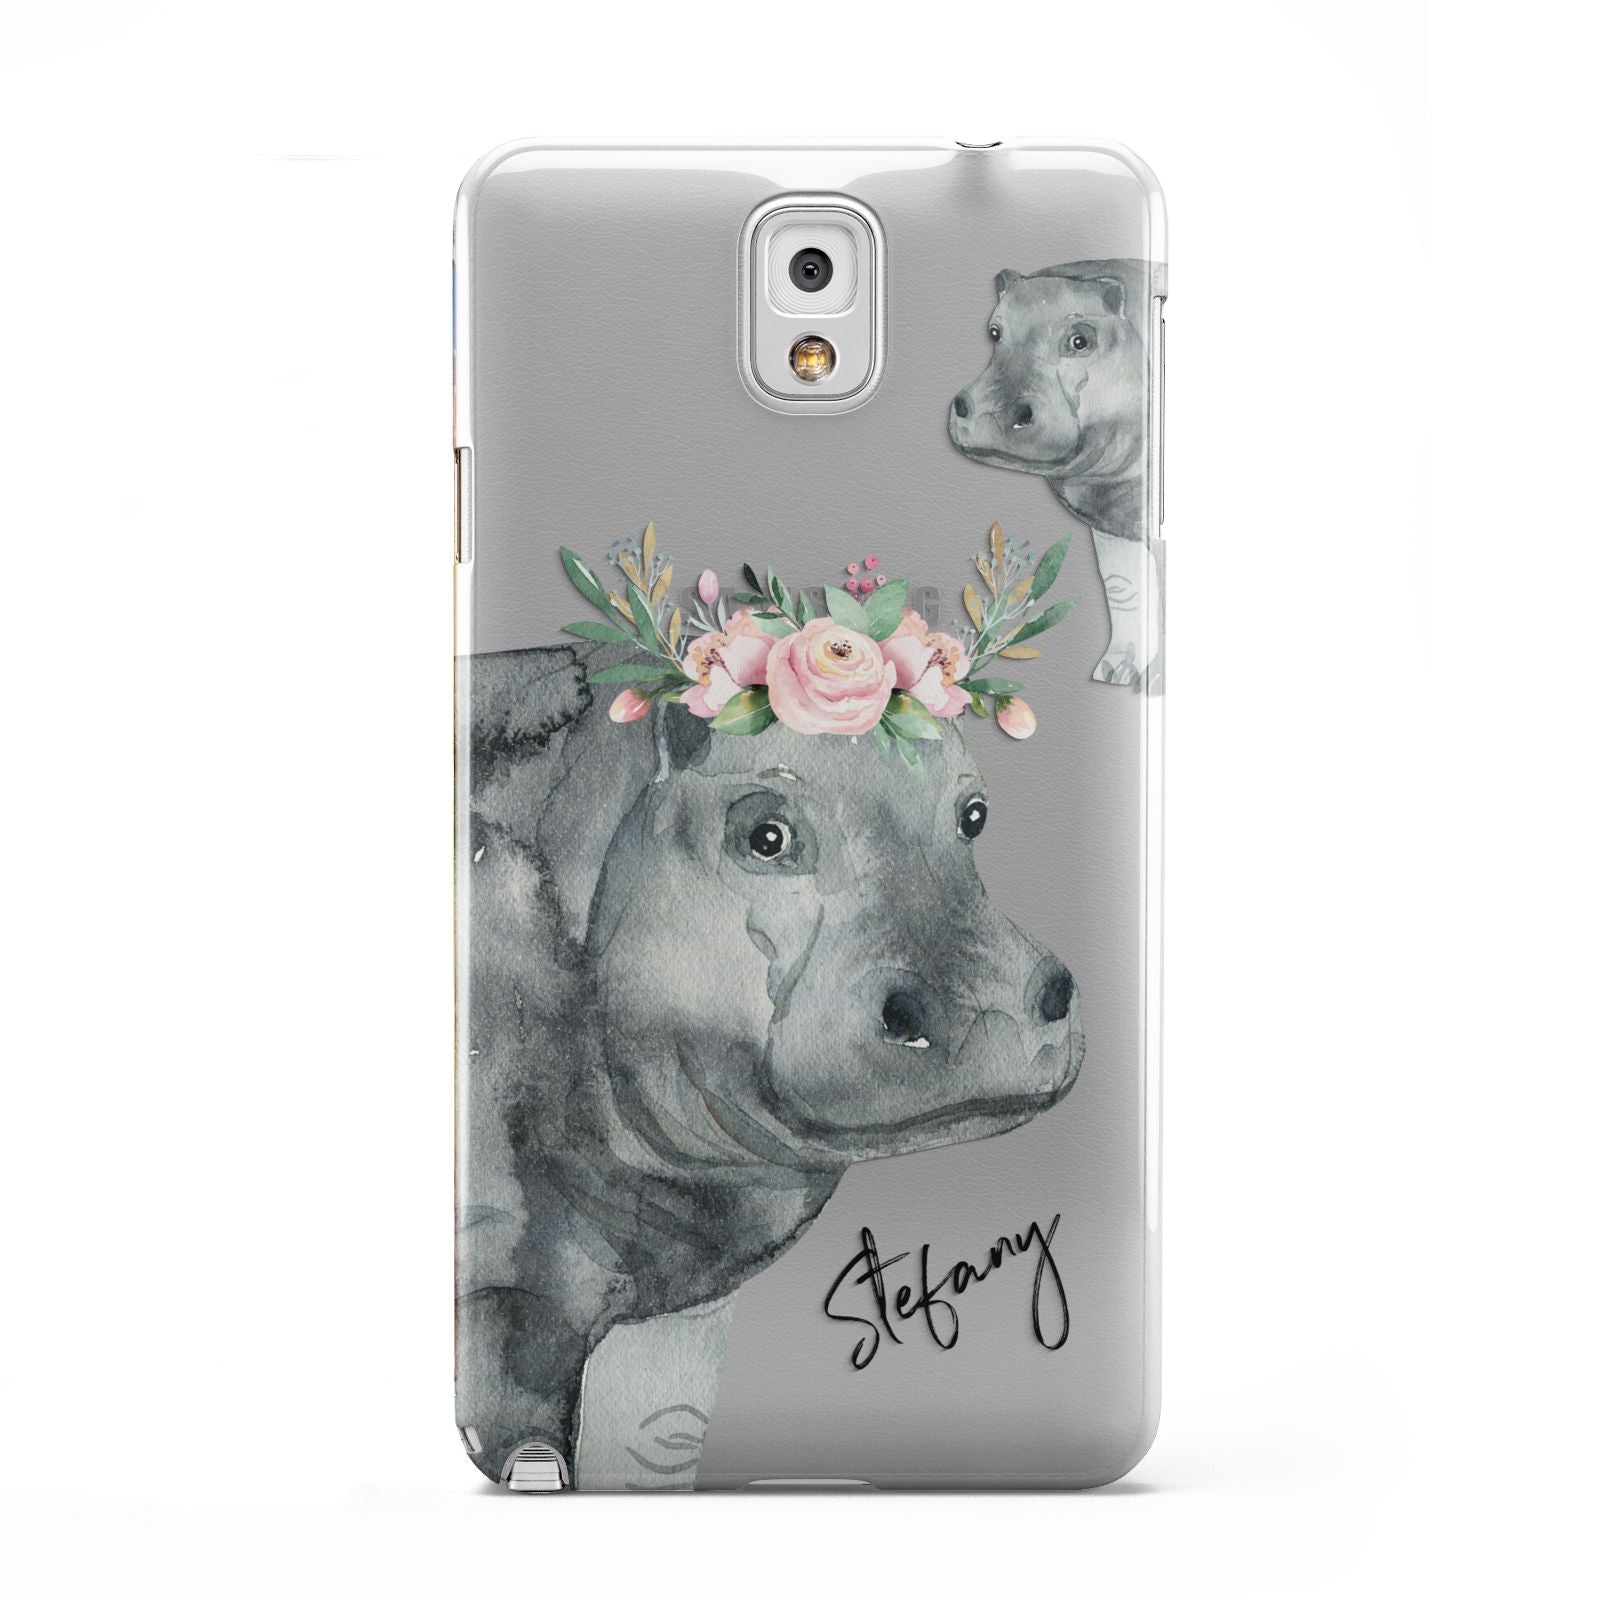 Personalised Hippopotamus Samsung Galaxy Note 3 Case